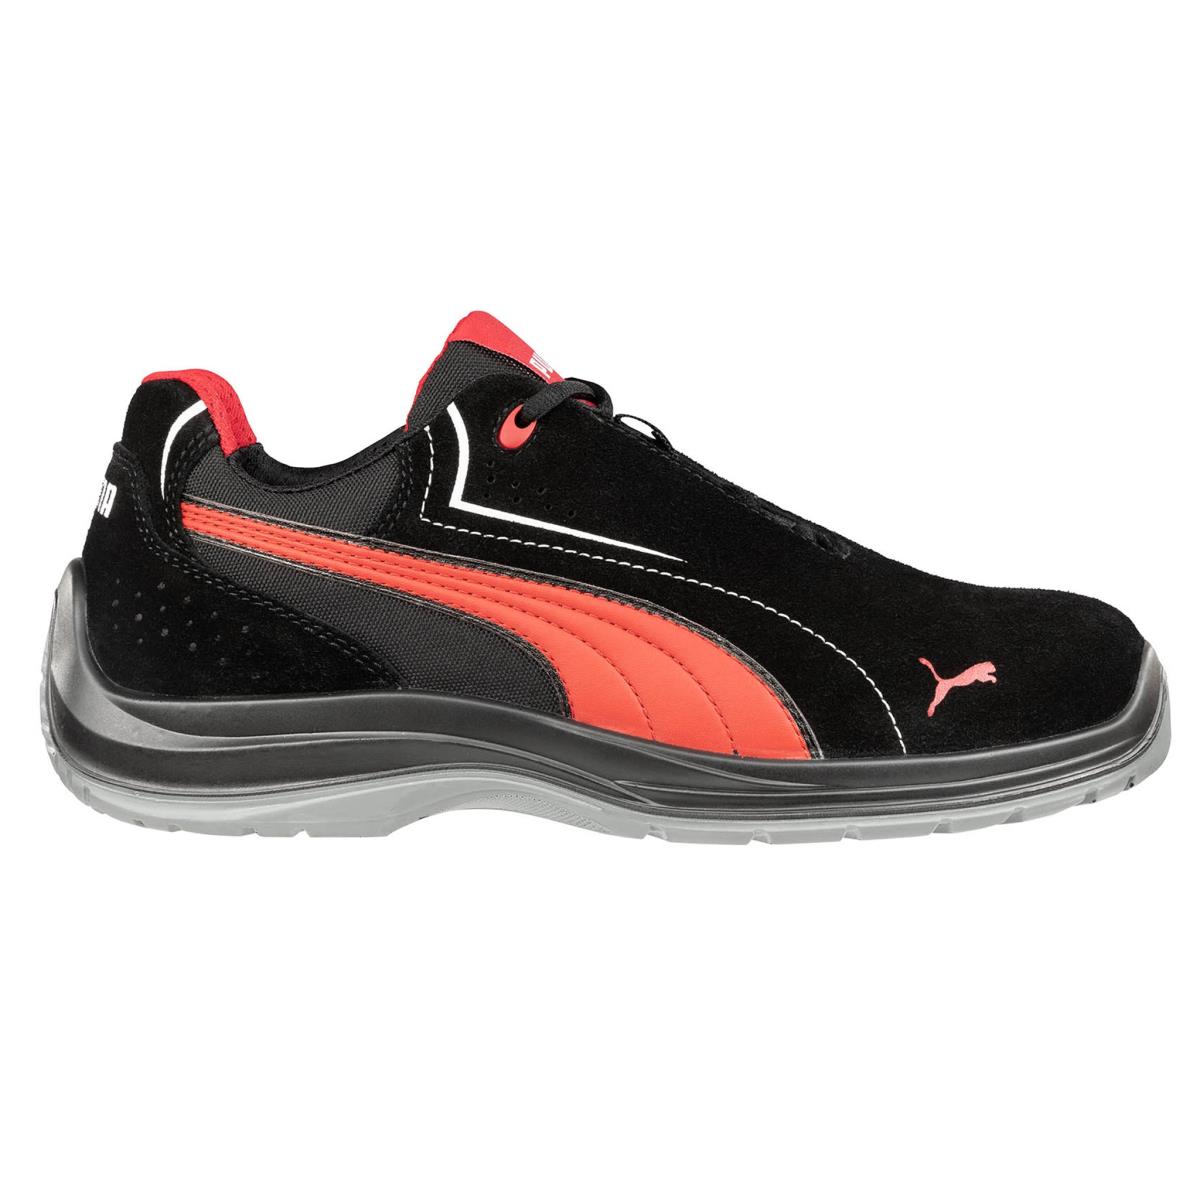 Puma Safety Mens Touring Black Suede Low Slip Resistant Composite Toe Work Shoes US 9 M